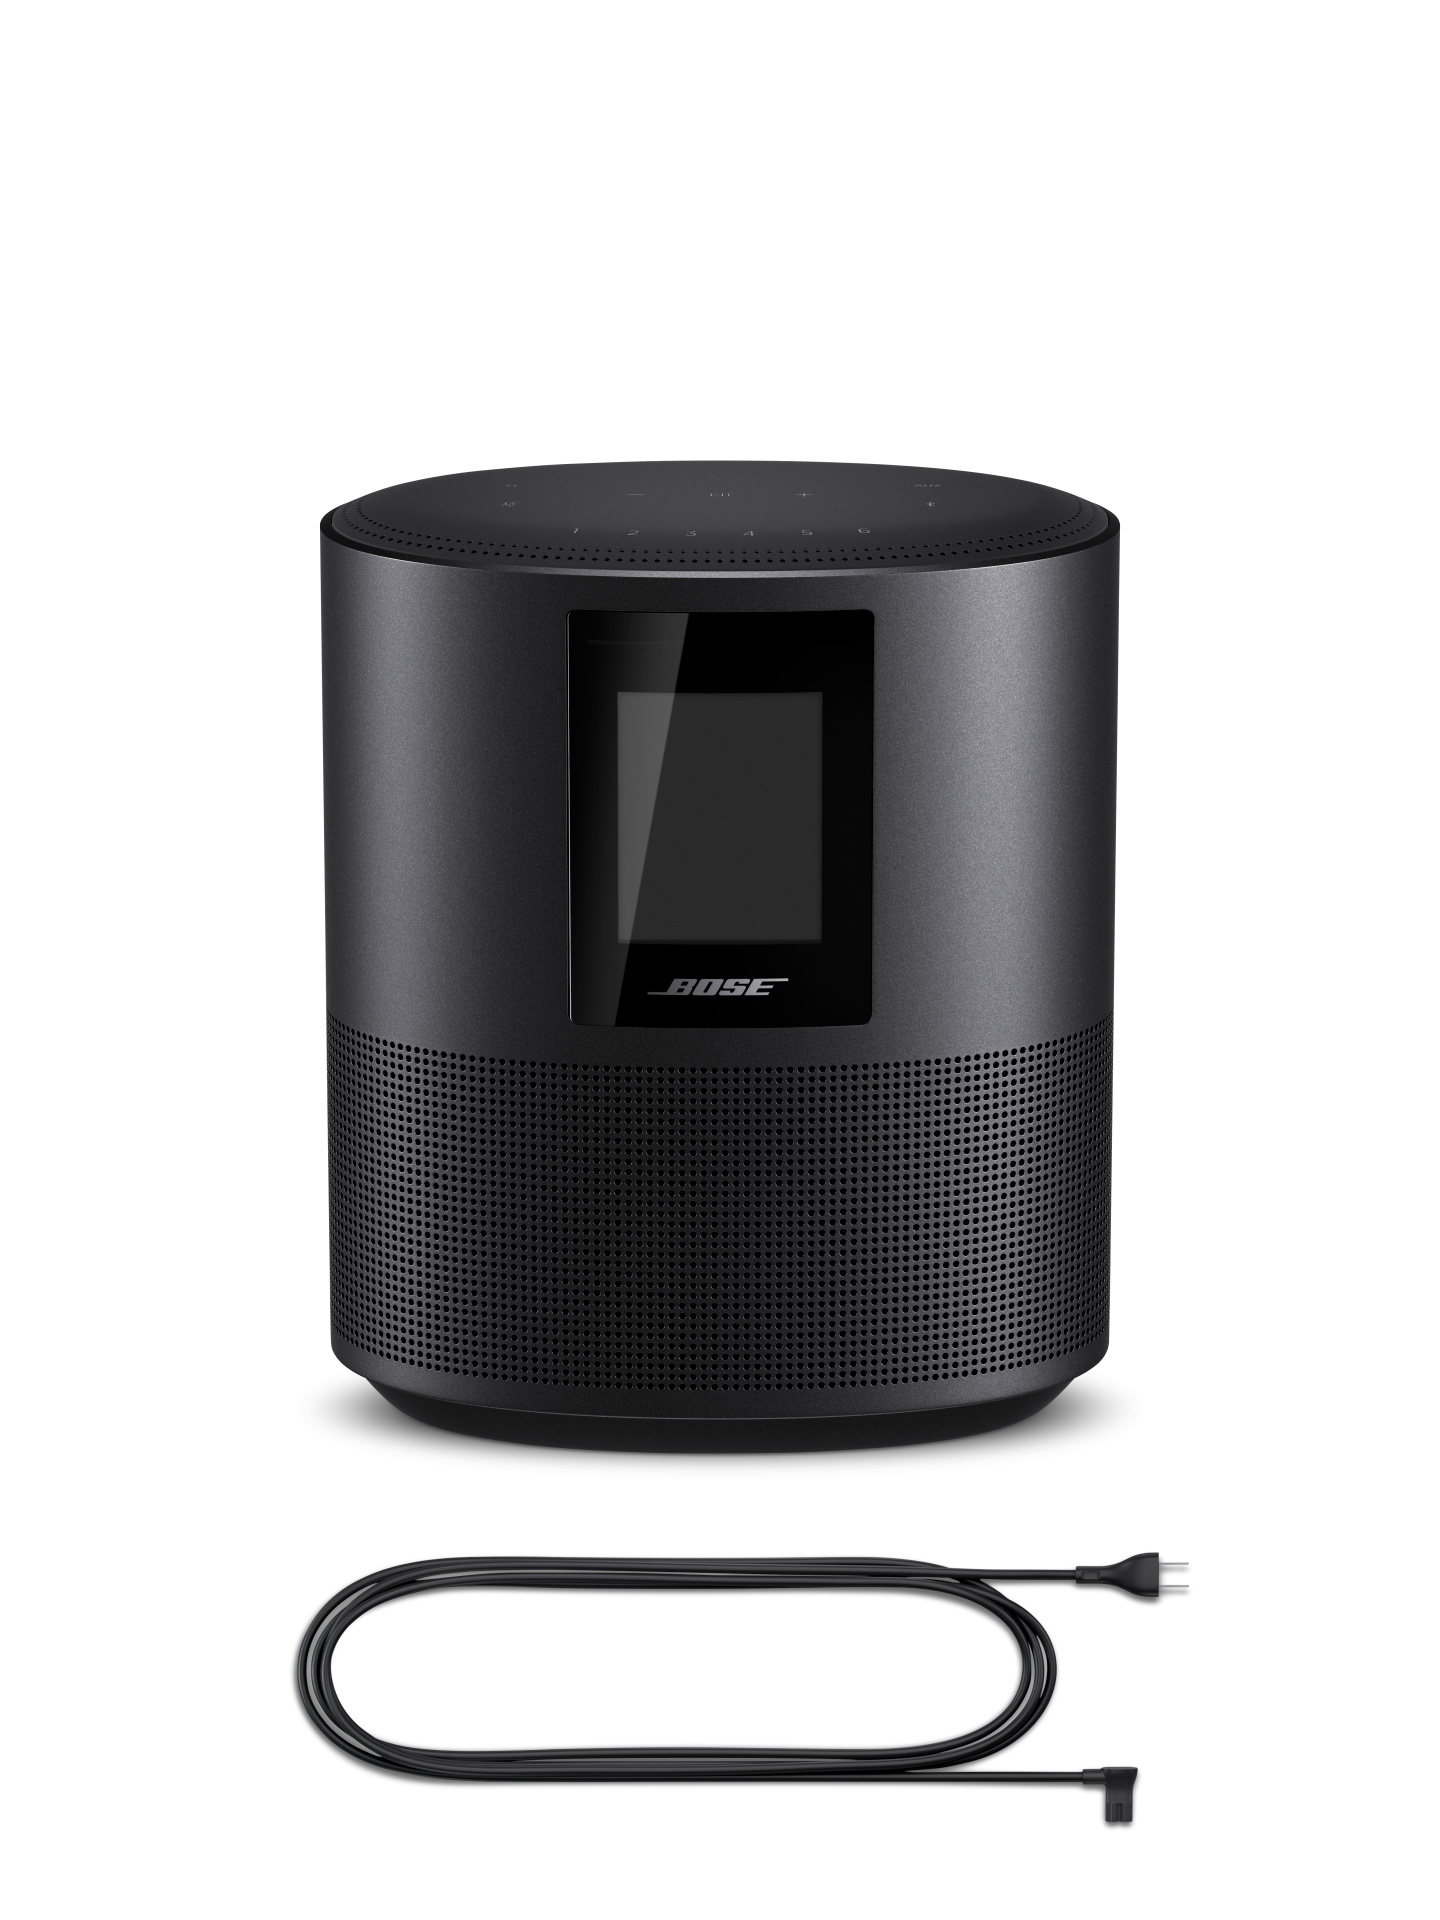 Bose Home Speaker 500 Wireless Smart Speaker with Google Assistant - Black - image 3 of 6